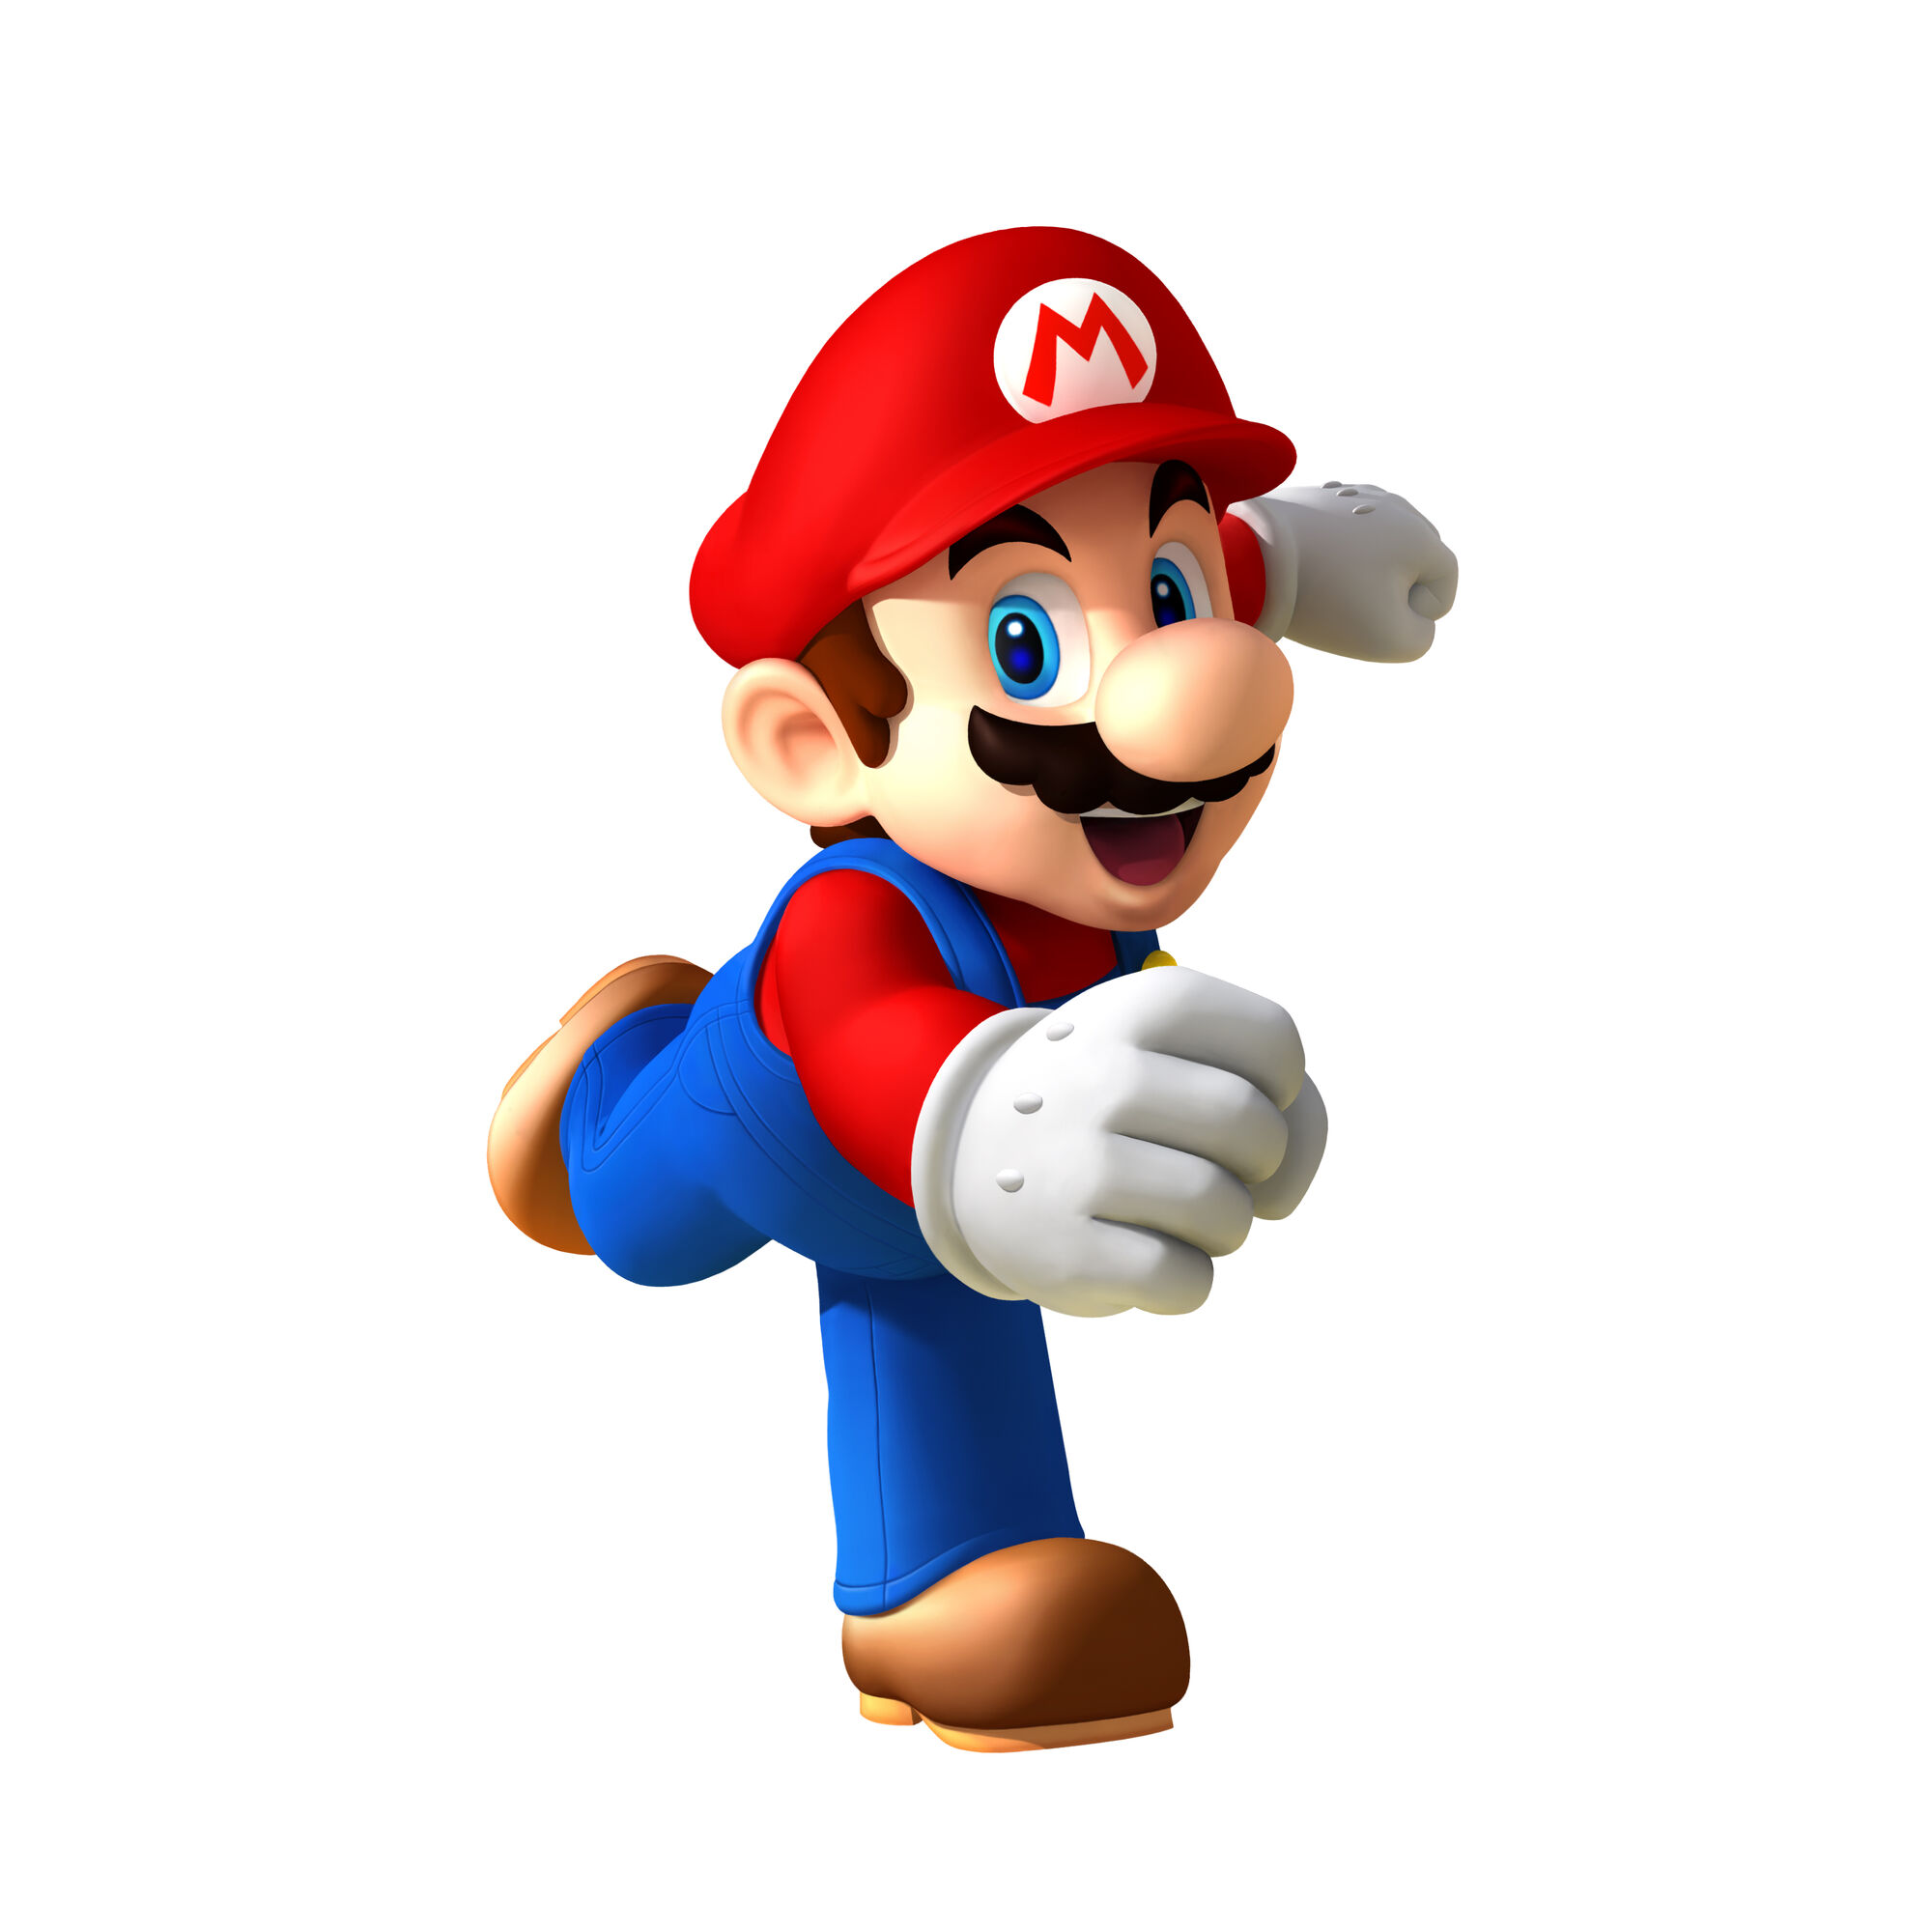 Super Mario Adventures The Game Fantendo Nintendo Fanon Wiki Fandom Powered By Wikia 5545